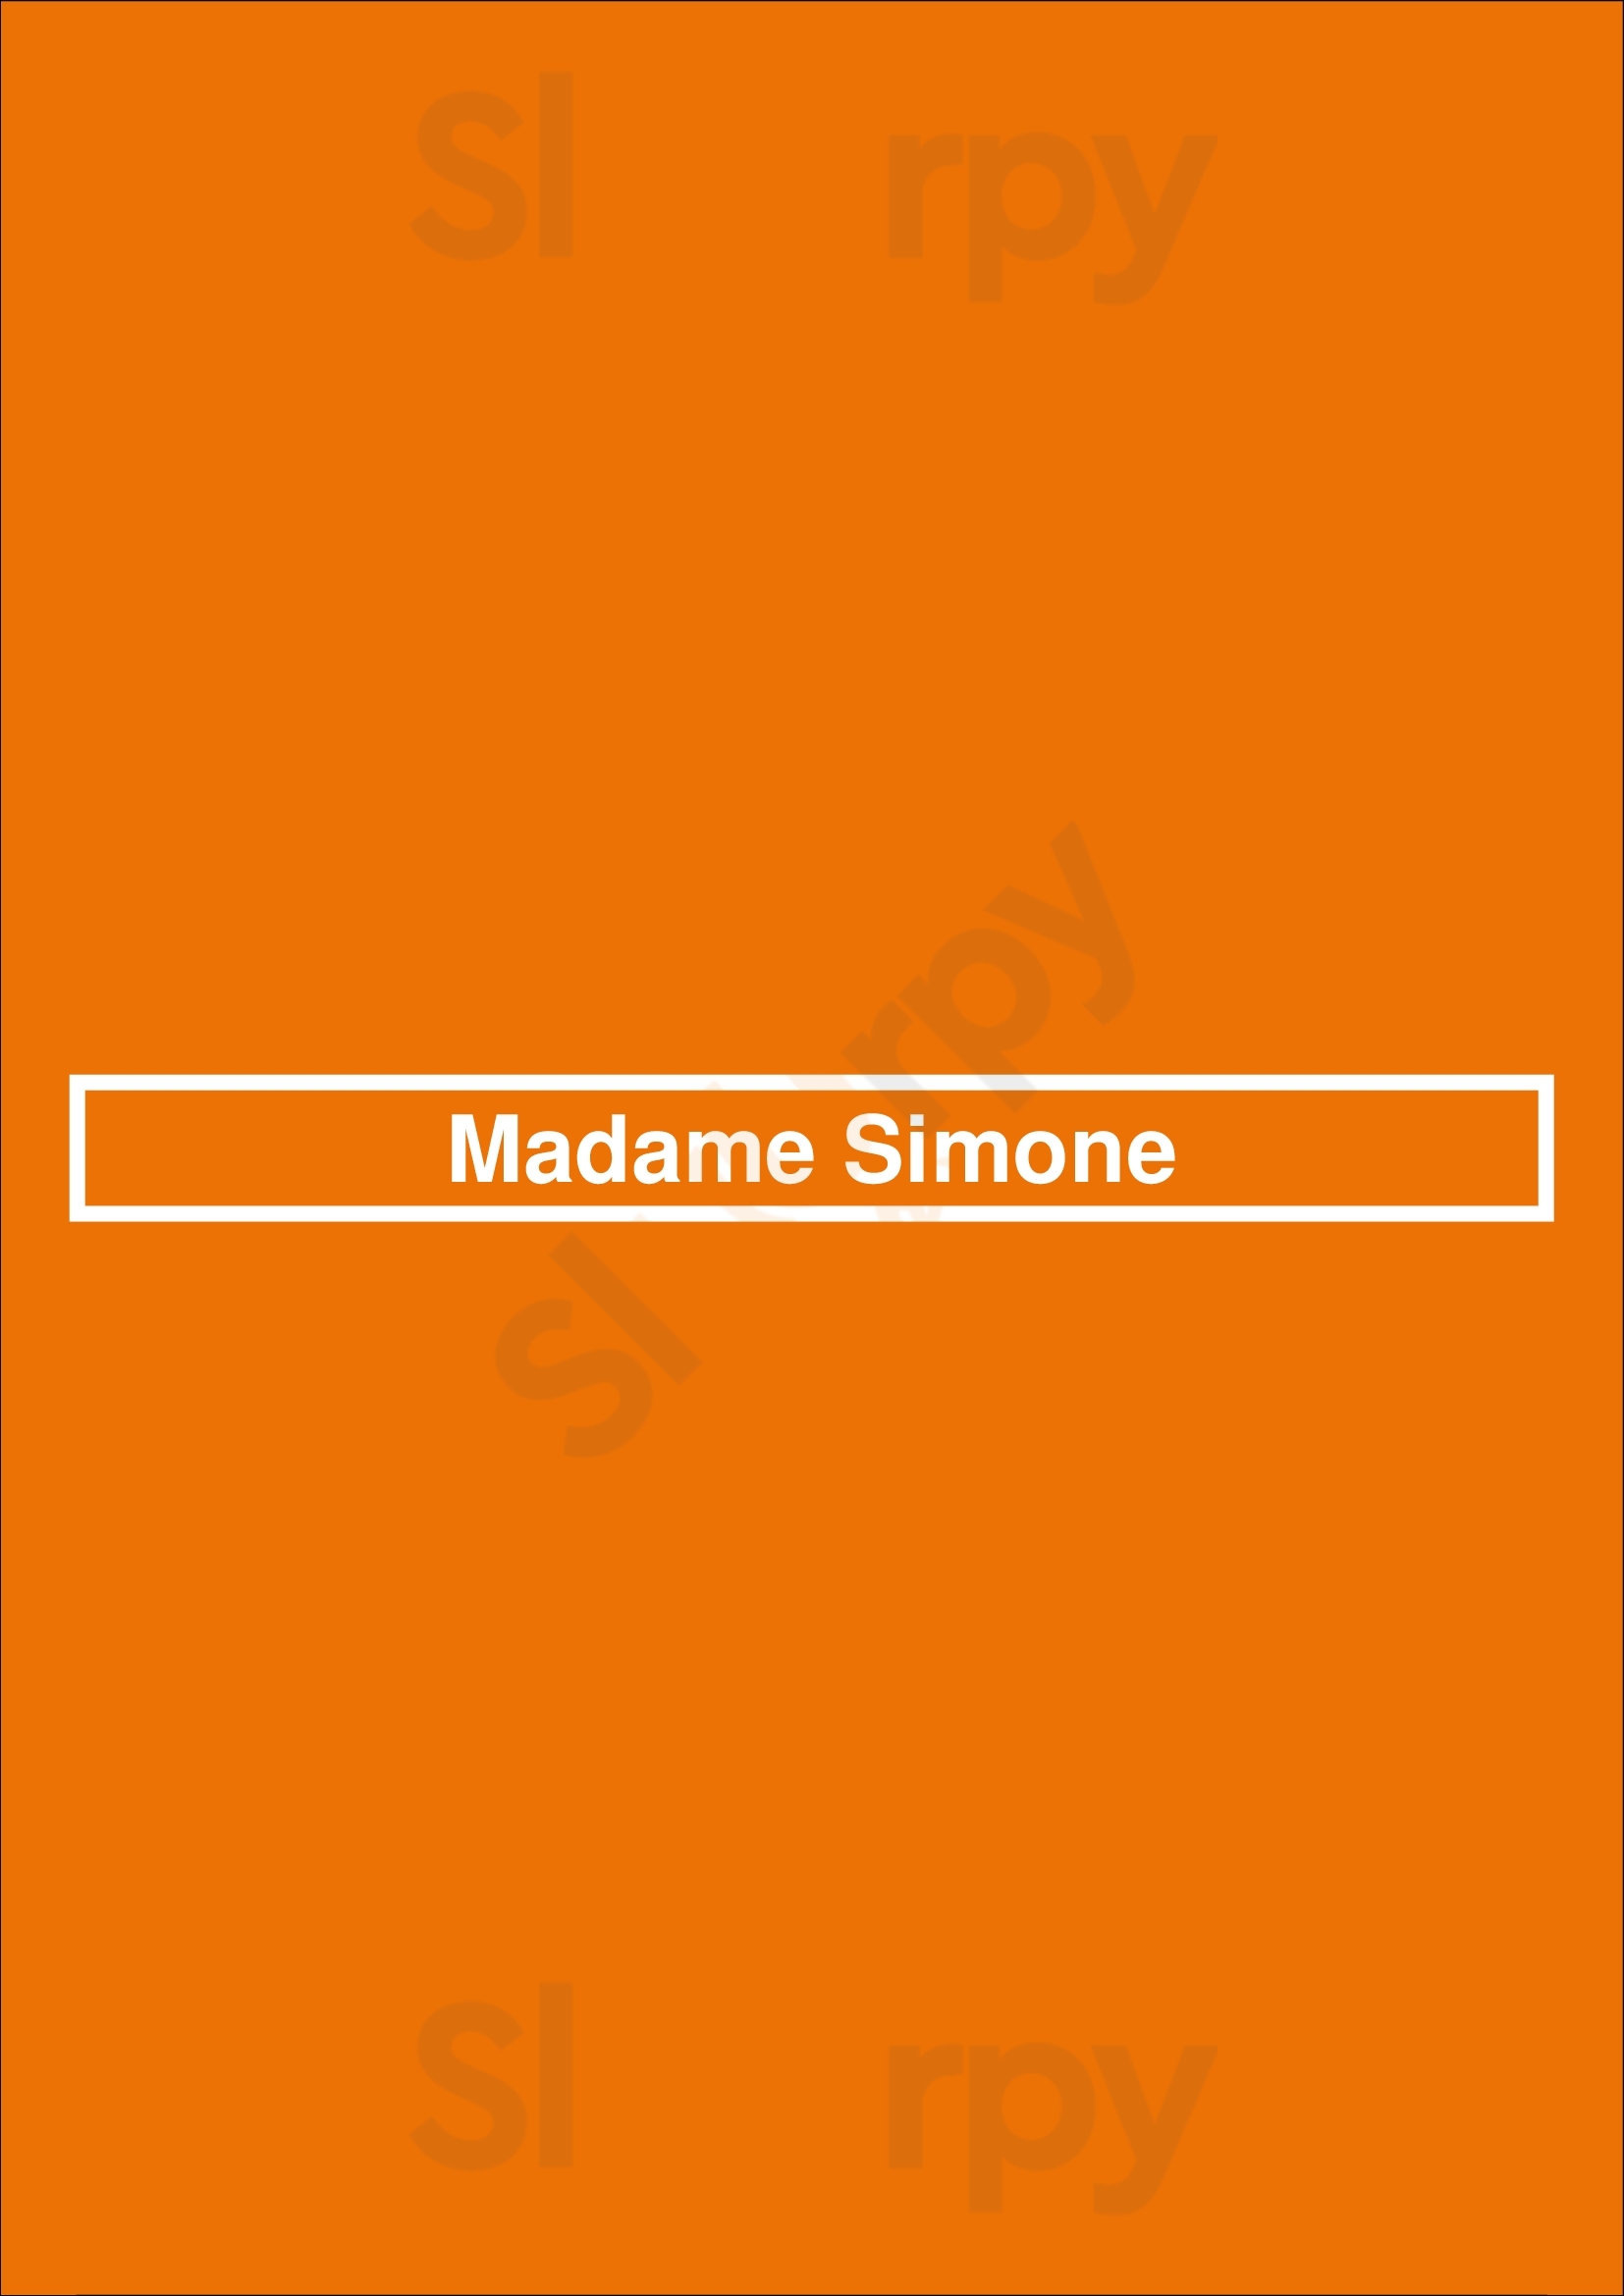 Madame Simone Paris Menu - 1